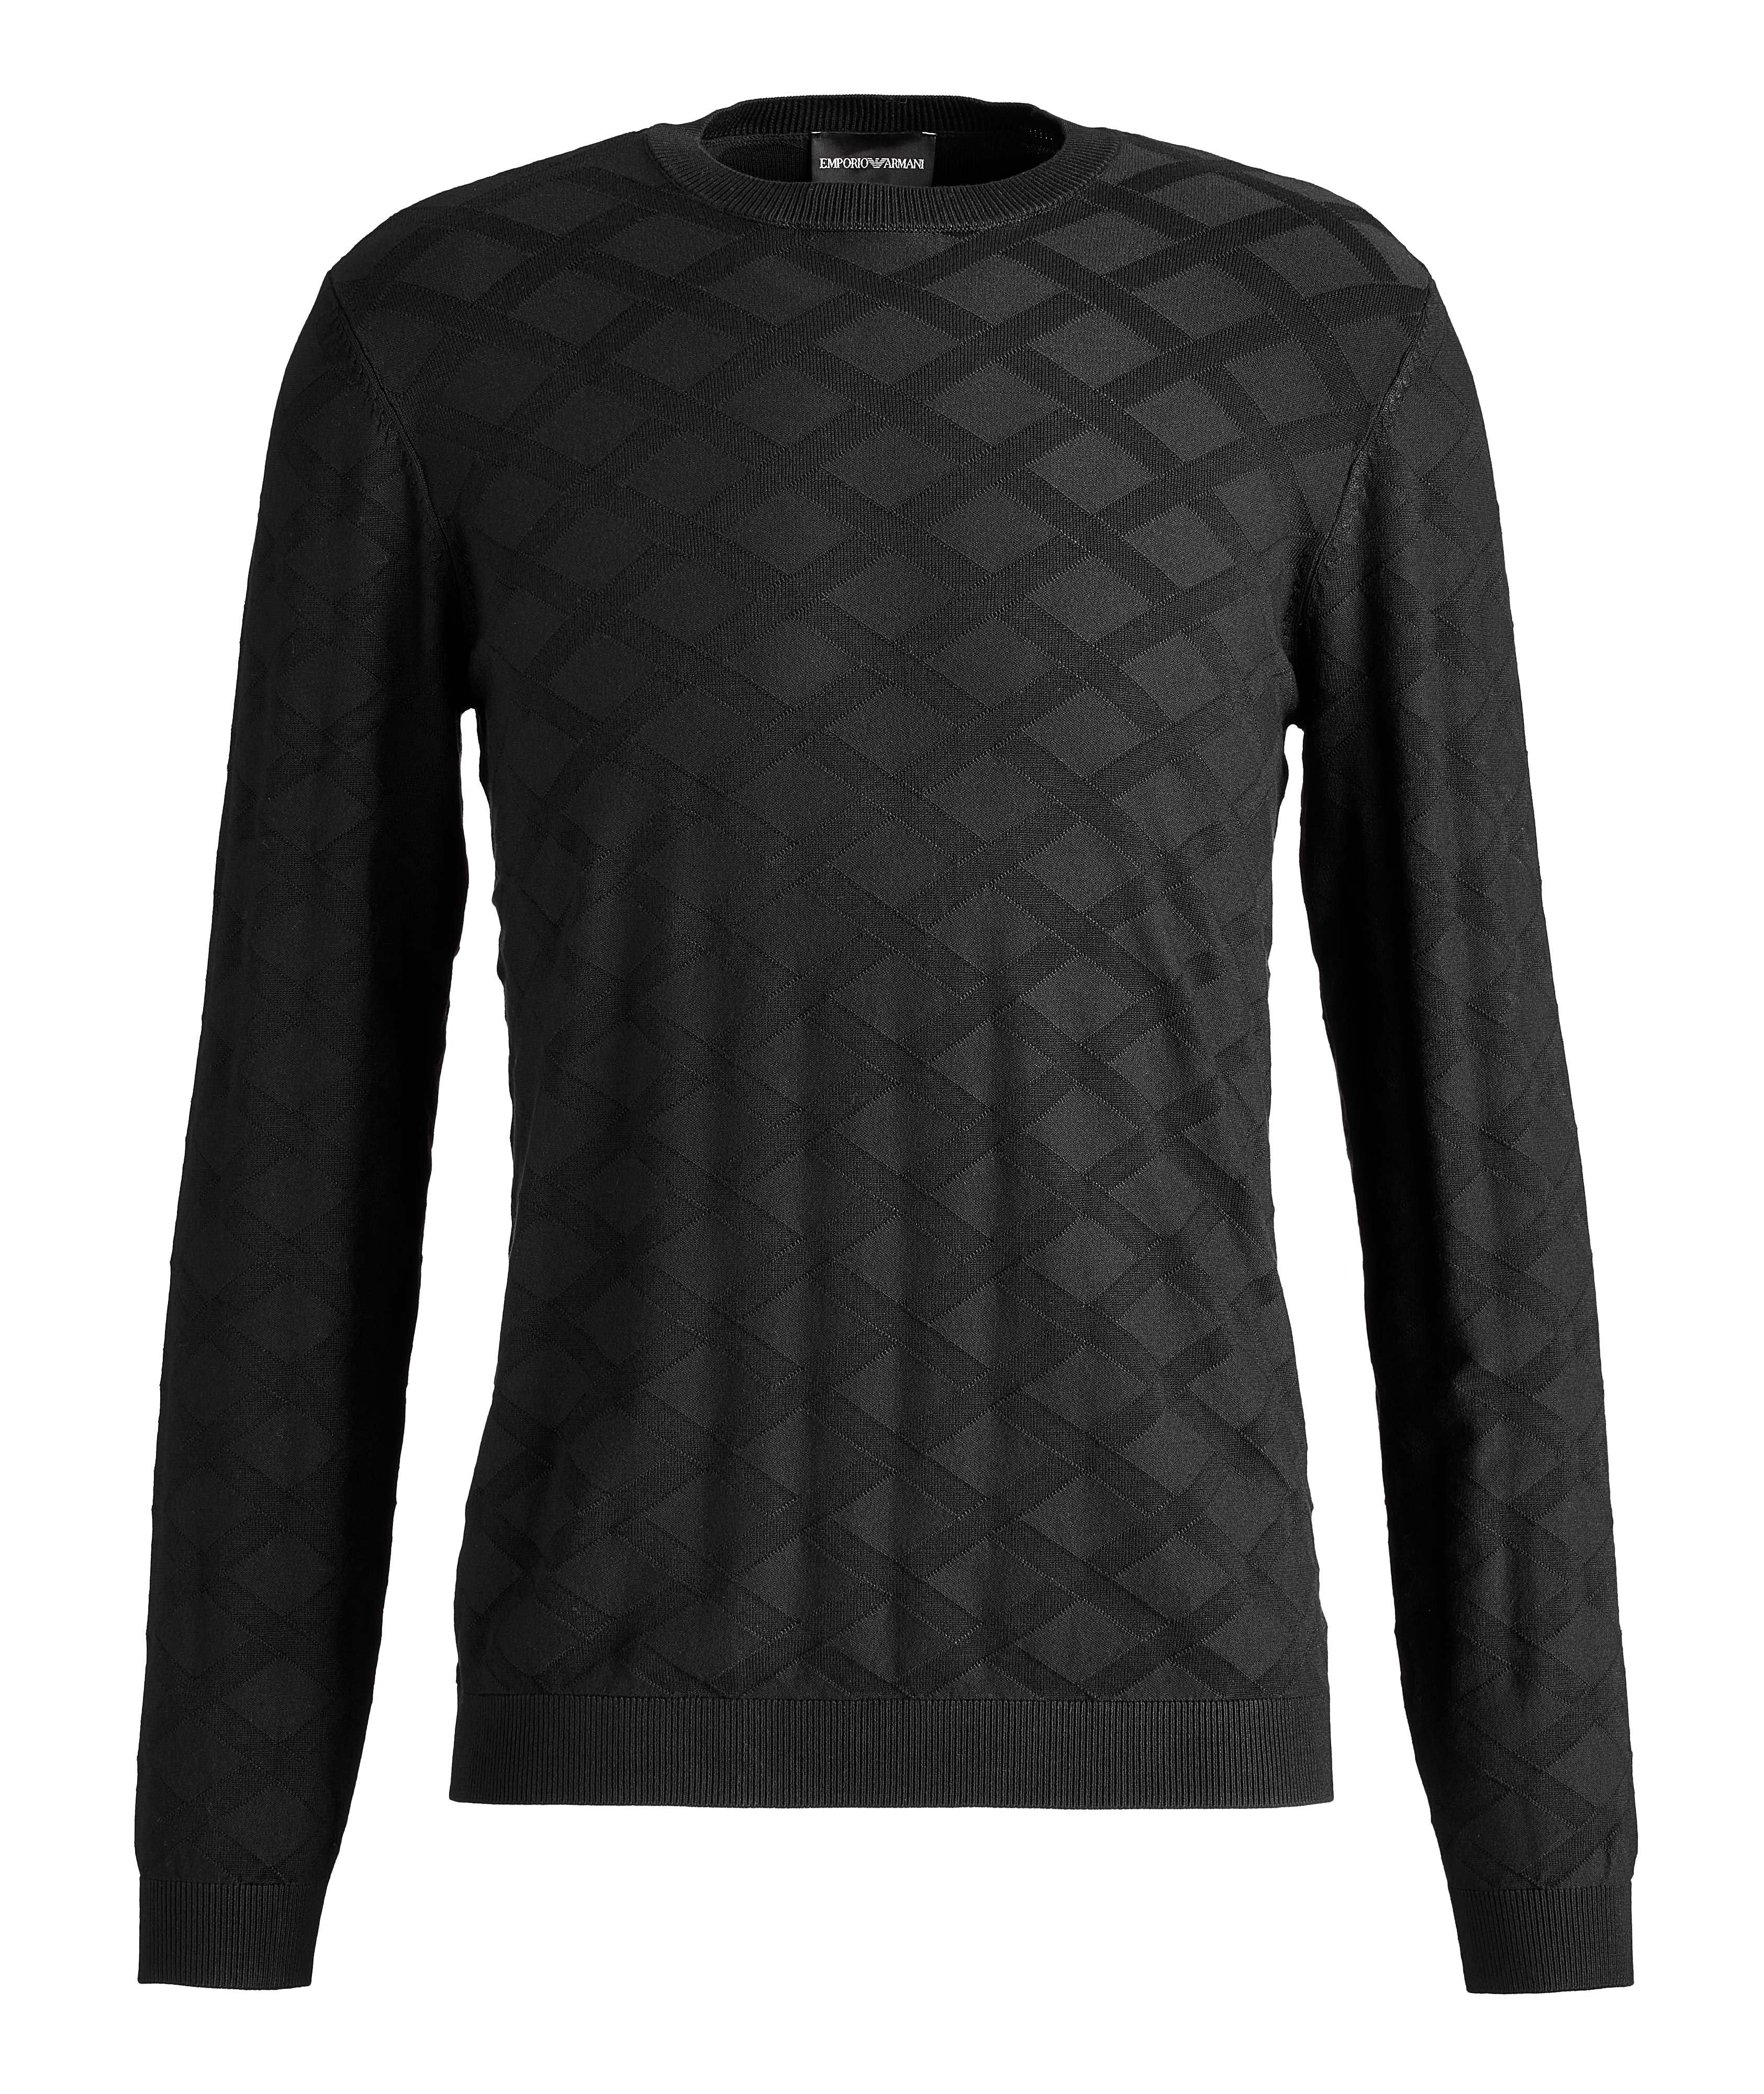 Geometric Motif Sweater image 0